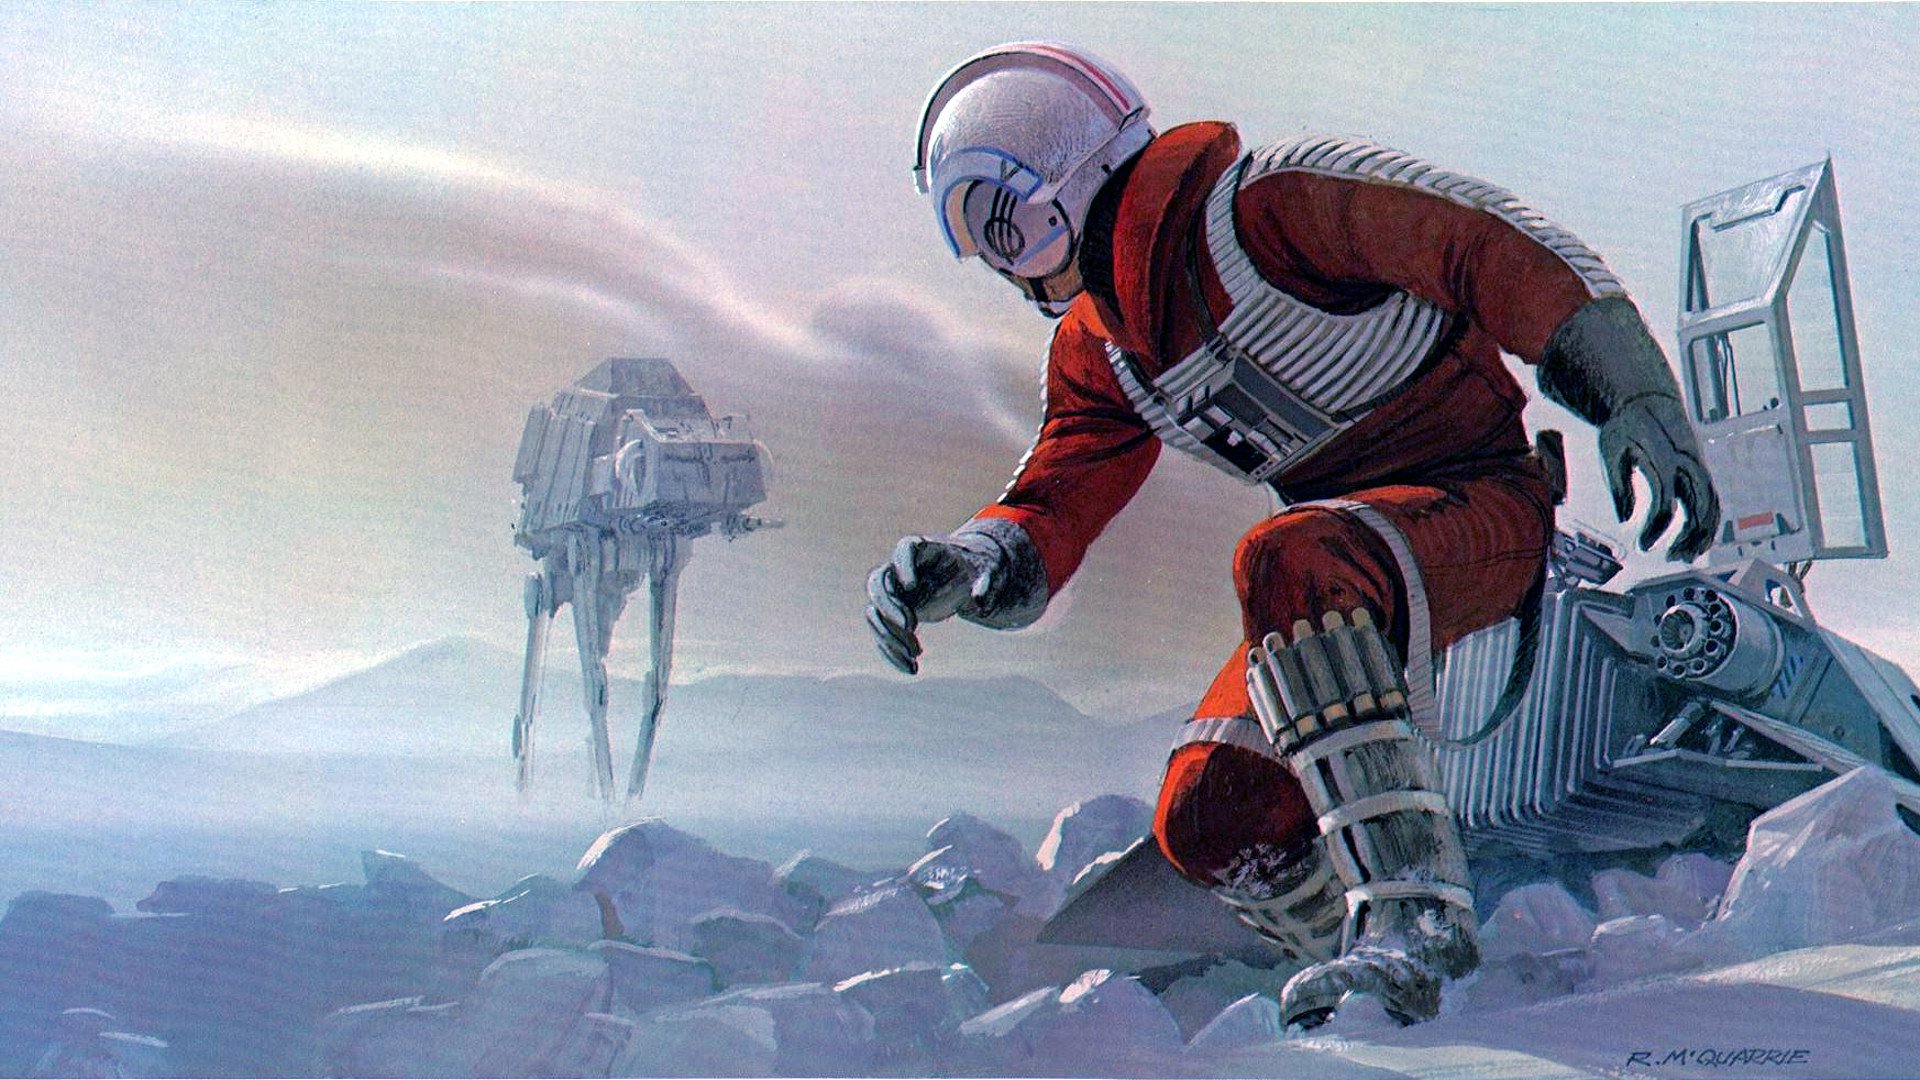 Movie Star Wars Episode V: The Empire Strikes Back HD Wallpaper | Background Image